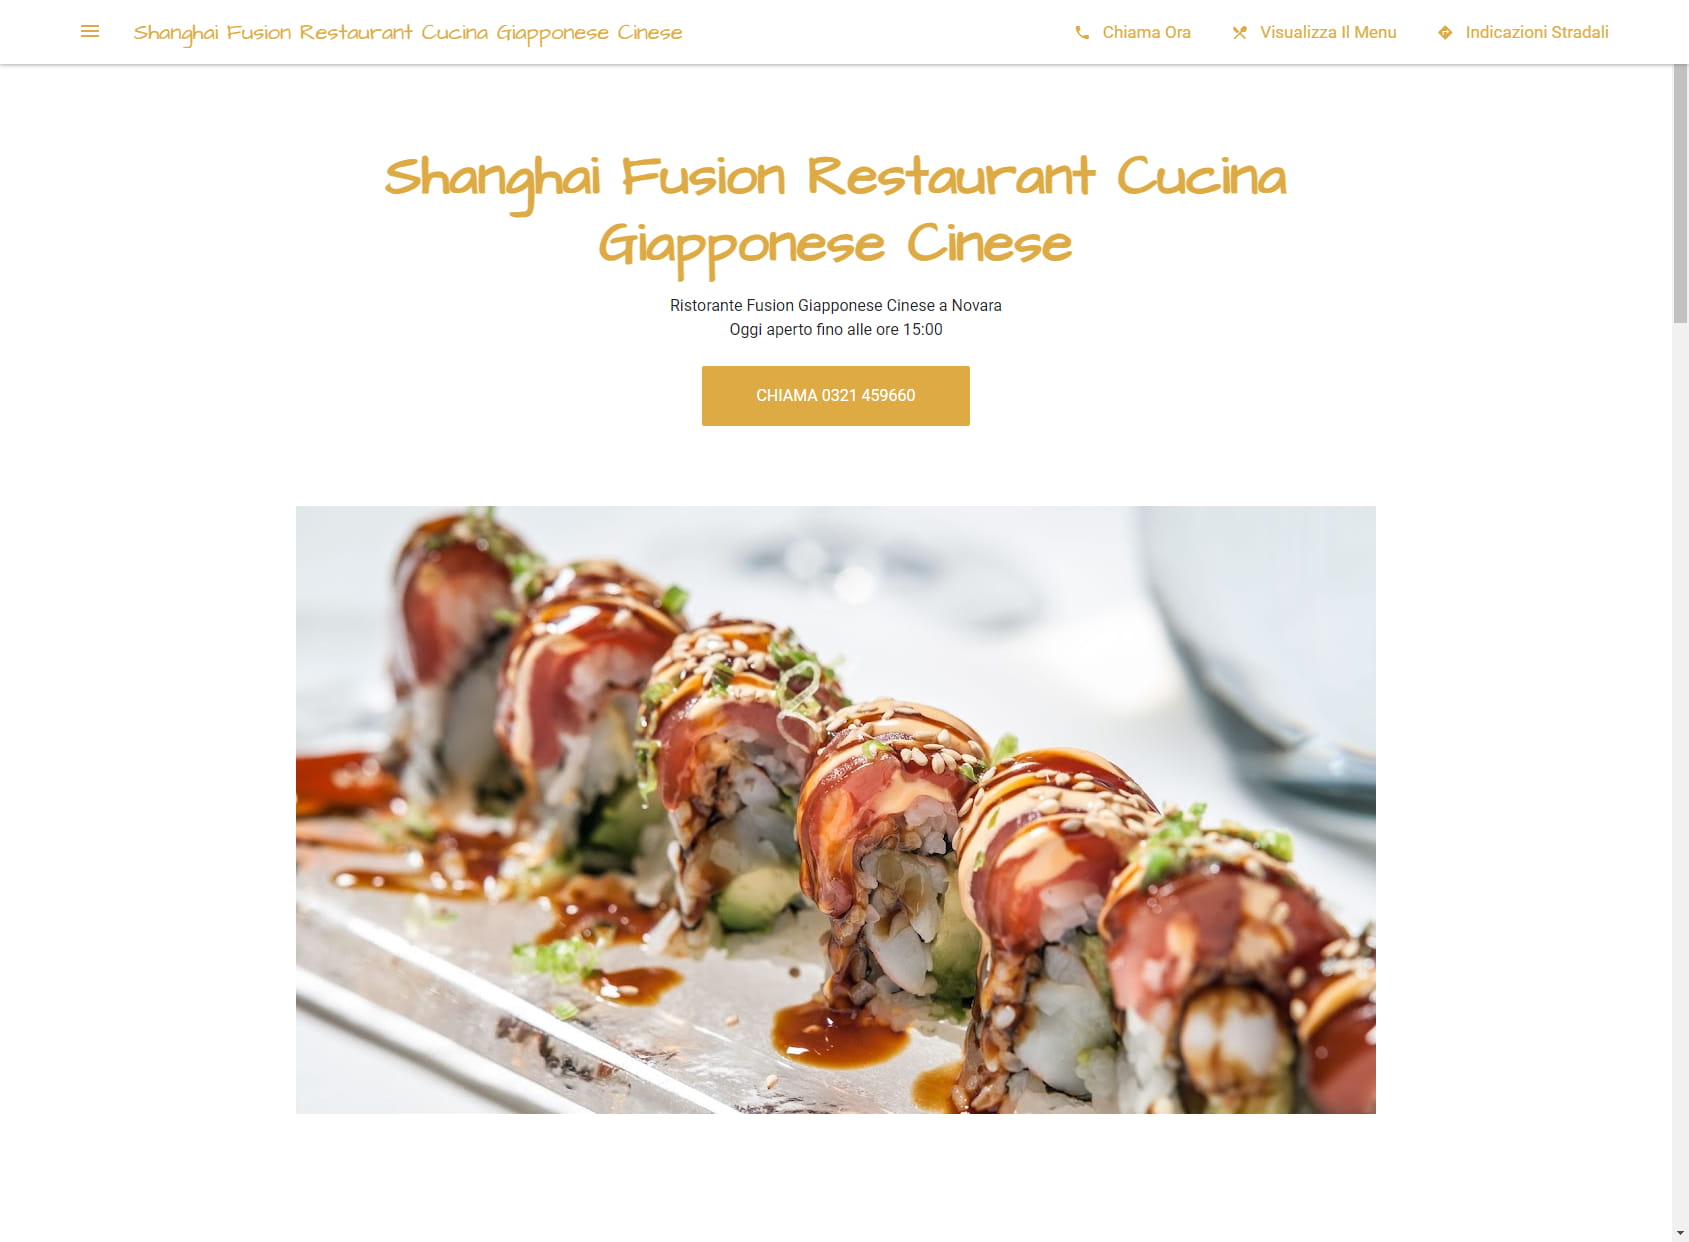 Shanghai Fusion Restaurant Cucina Giapponese Cinese